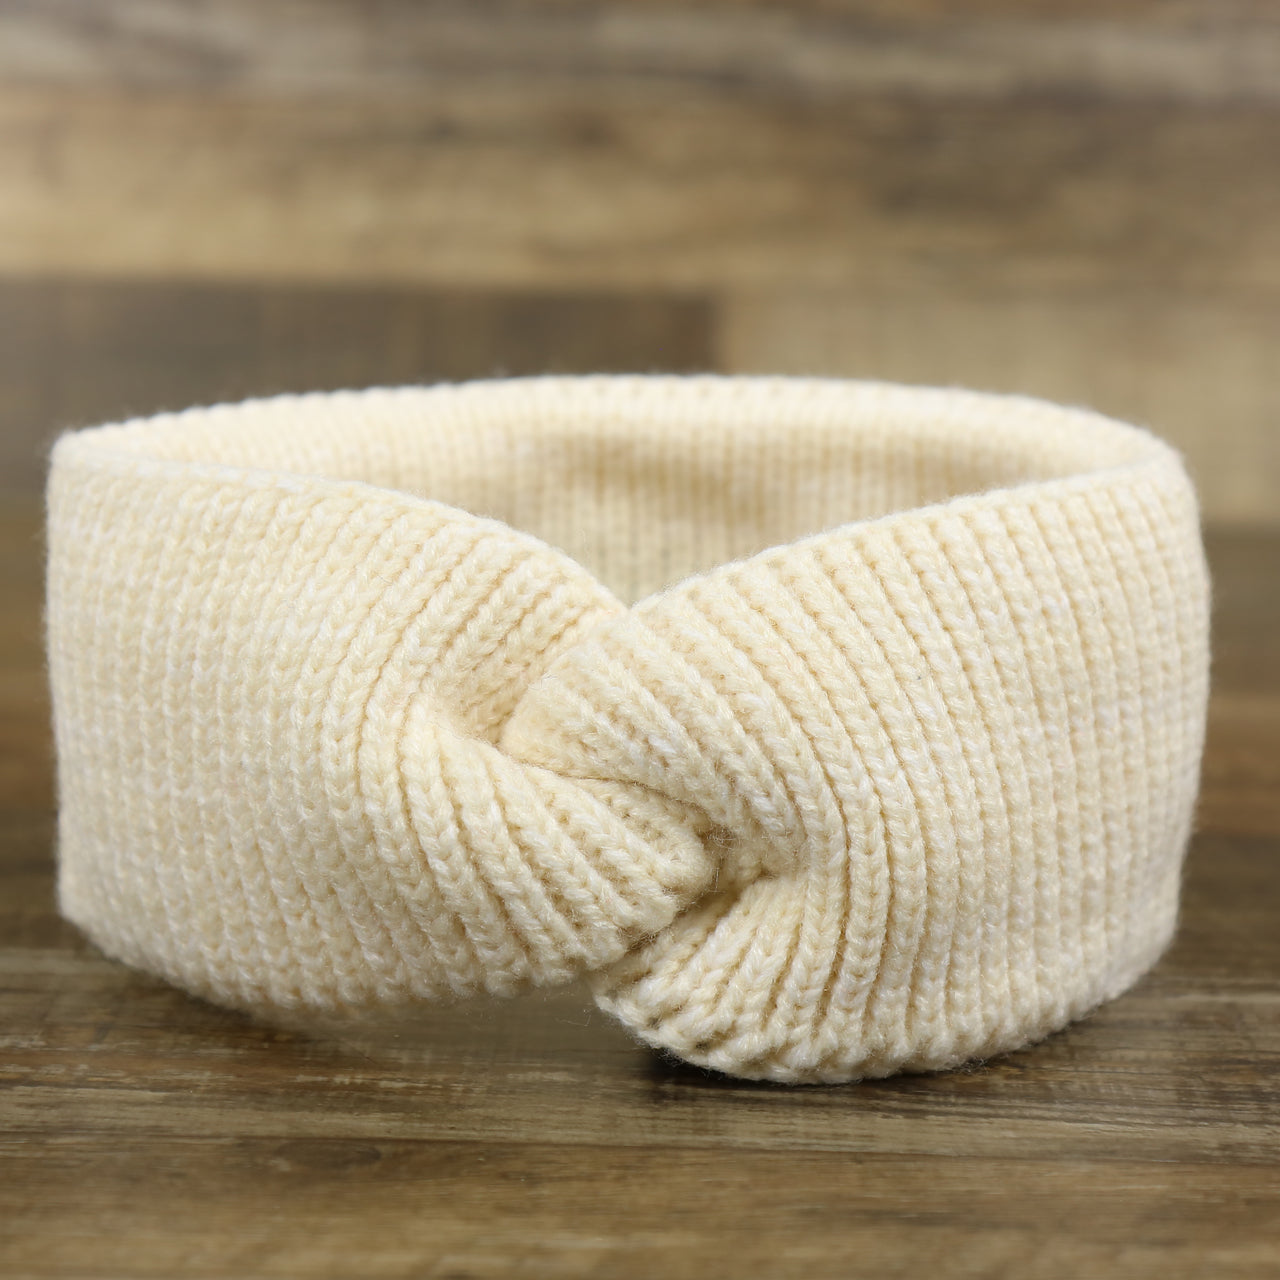 The backside of the Women’s Philadelphia Eagles Winter Knit Cream Twisted Headband | White Twisted Headband